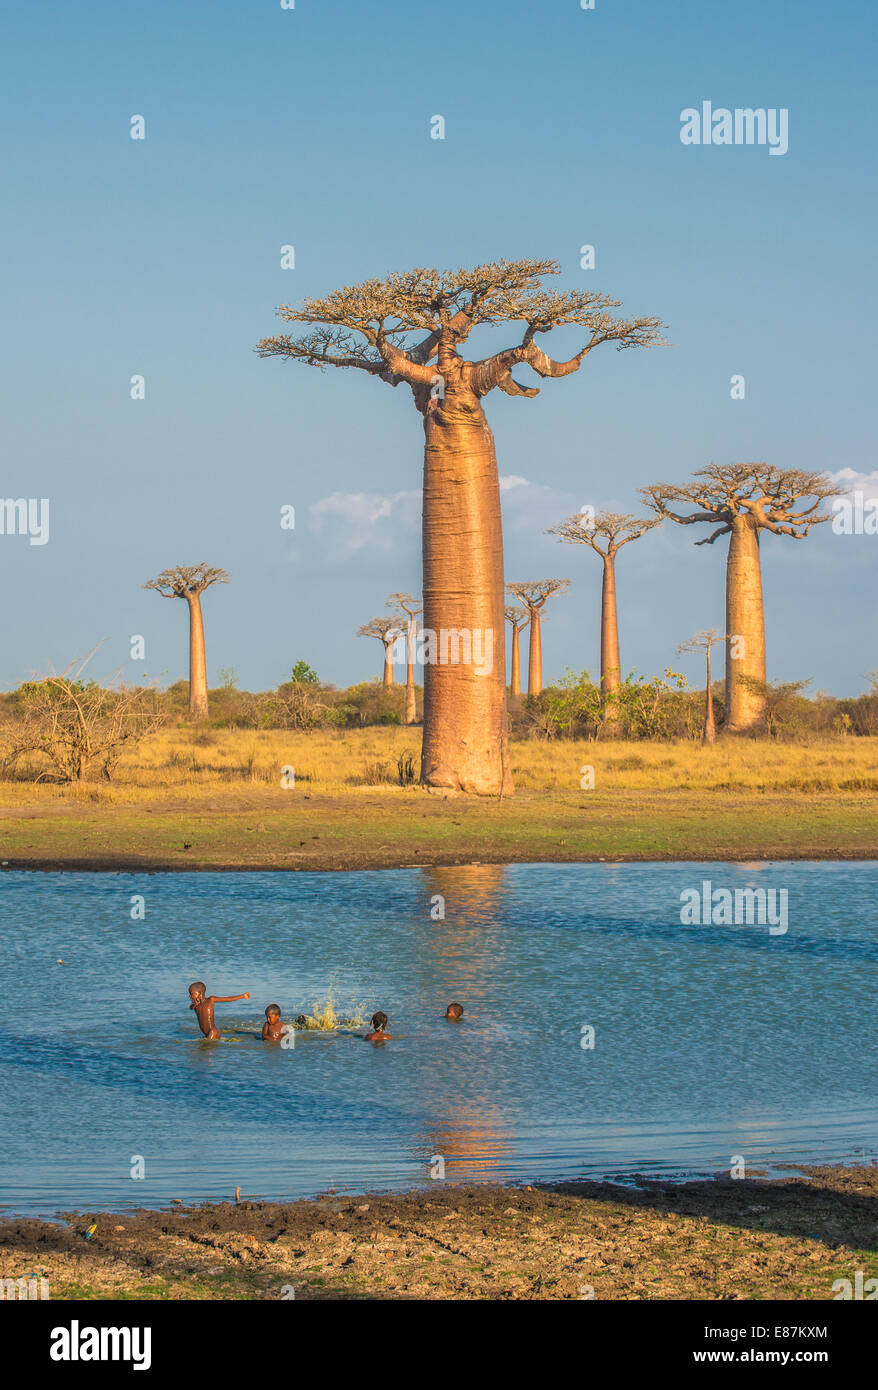 Viale dei baobab, Madagascar Foto Stock